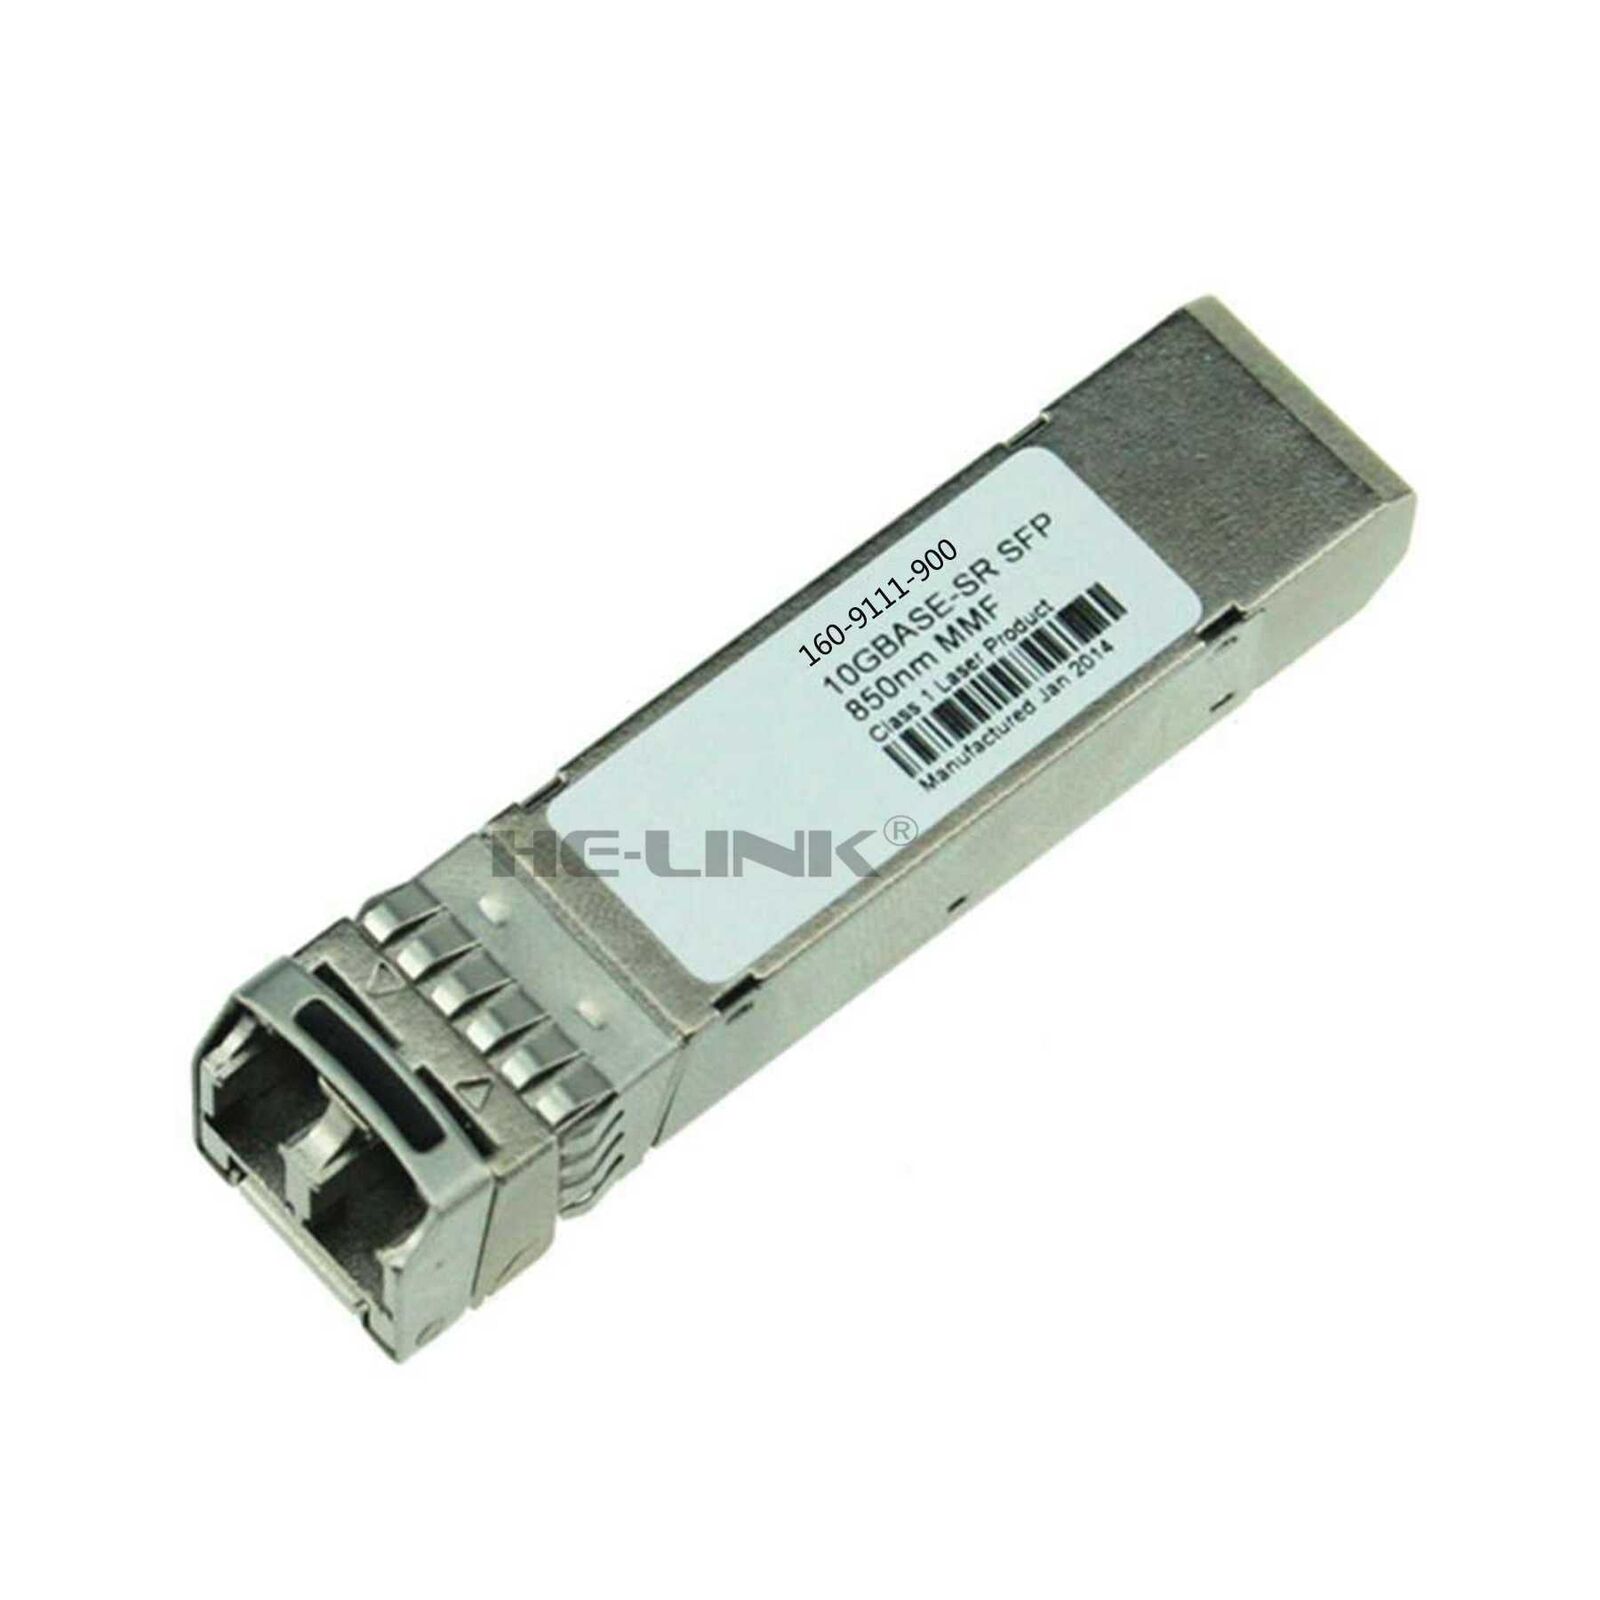 160-9111-900 Ciena Compatible 10GBASE-SR SFP+ 850nm 300m DOM Transceiver